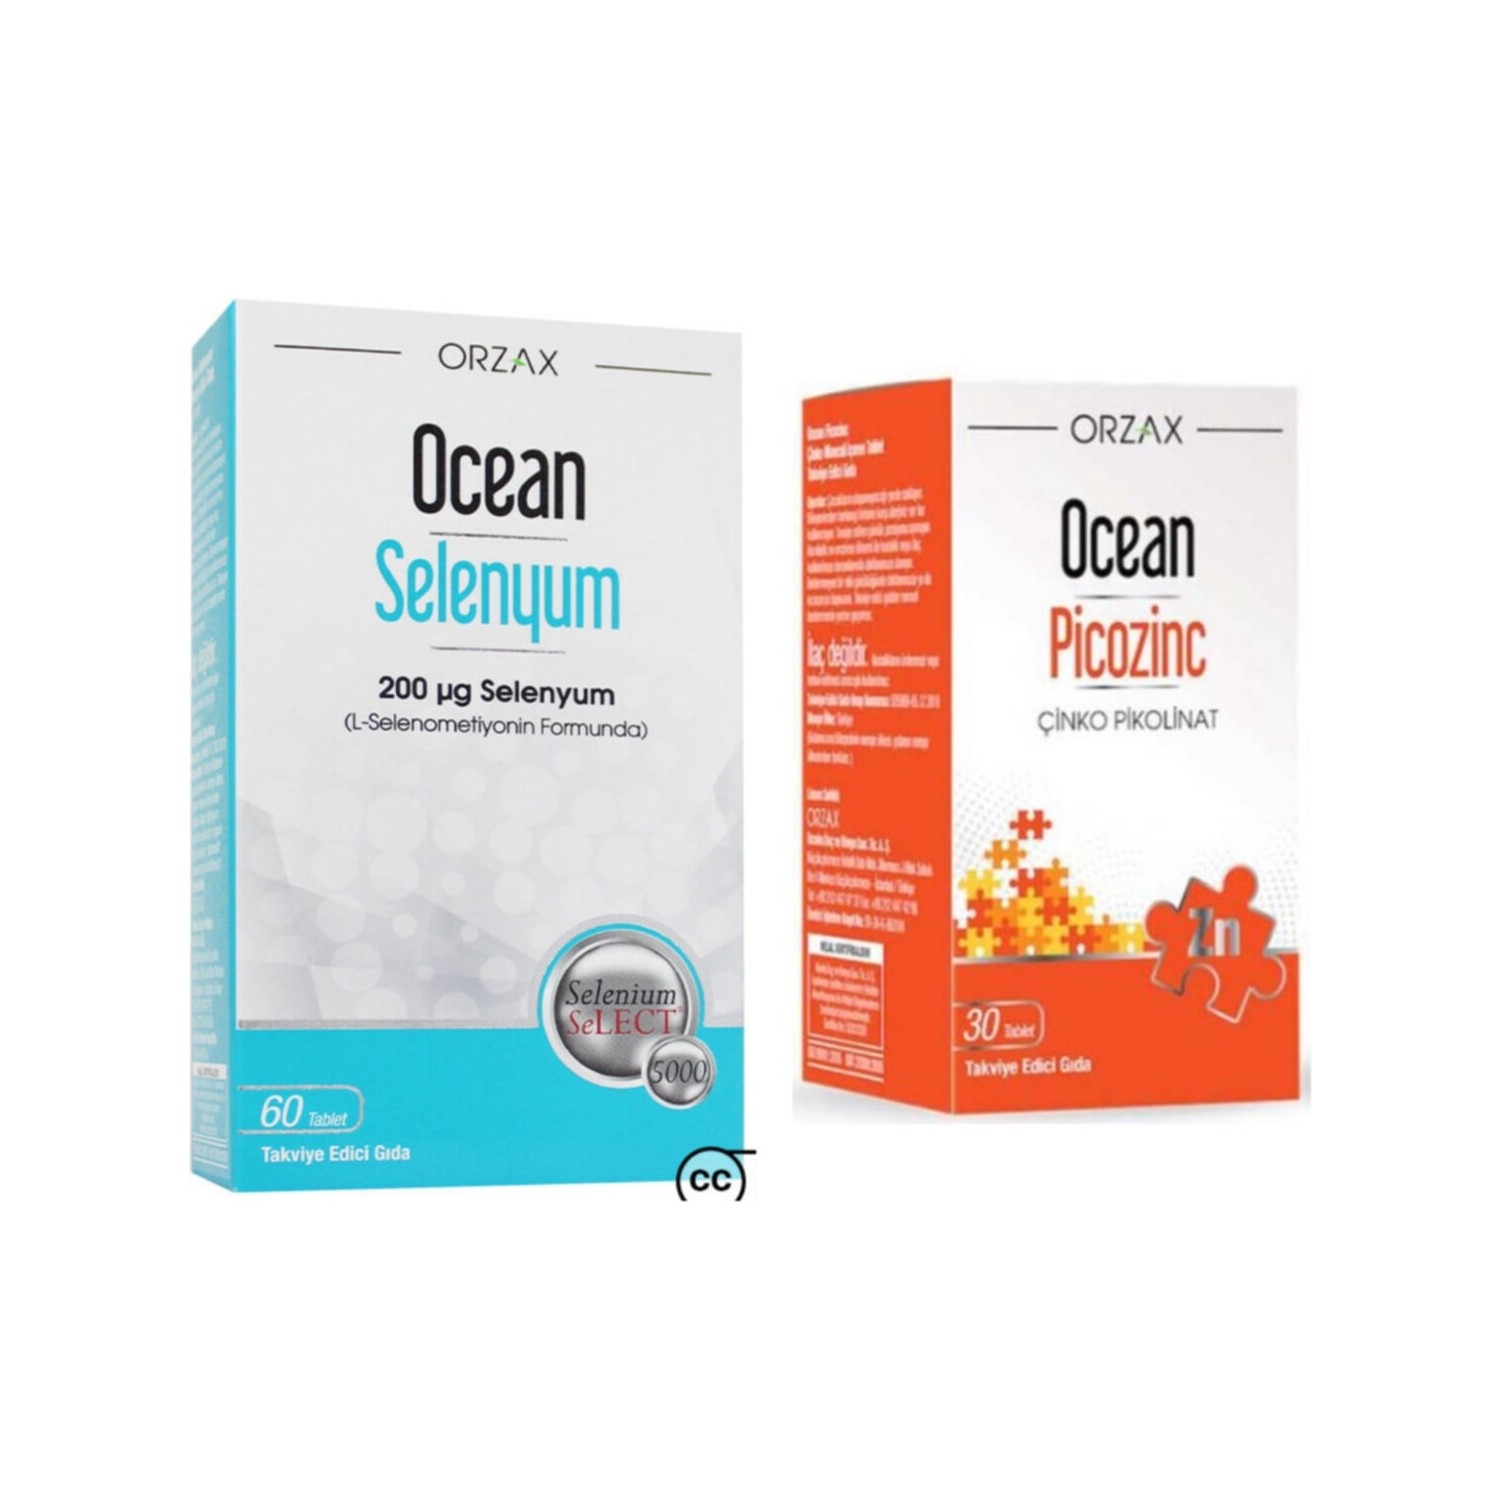 Селен Ocean 200 мкг, 60 таблеток + Пищевая добавка Ocean Picozinc Cinko Picolinate, 30 капсул пищевая добавка orzax ocean picozinc cinko picolinate 2 упаковки по 30 таблеток